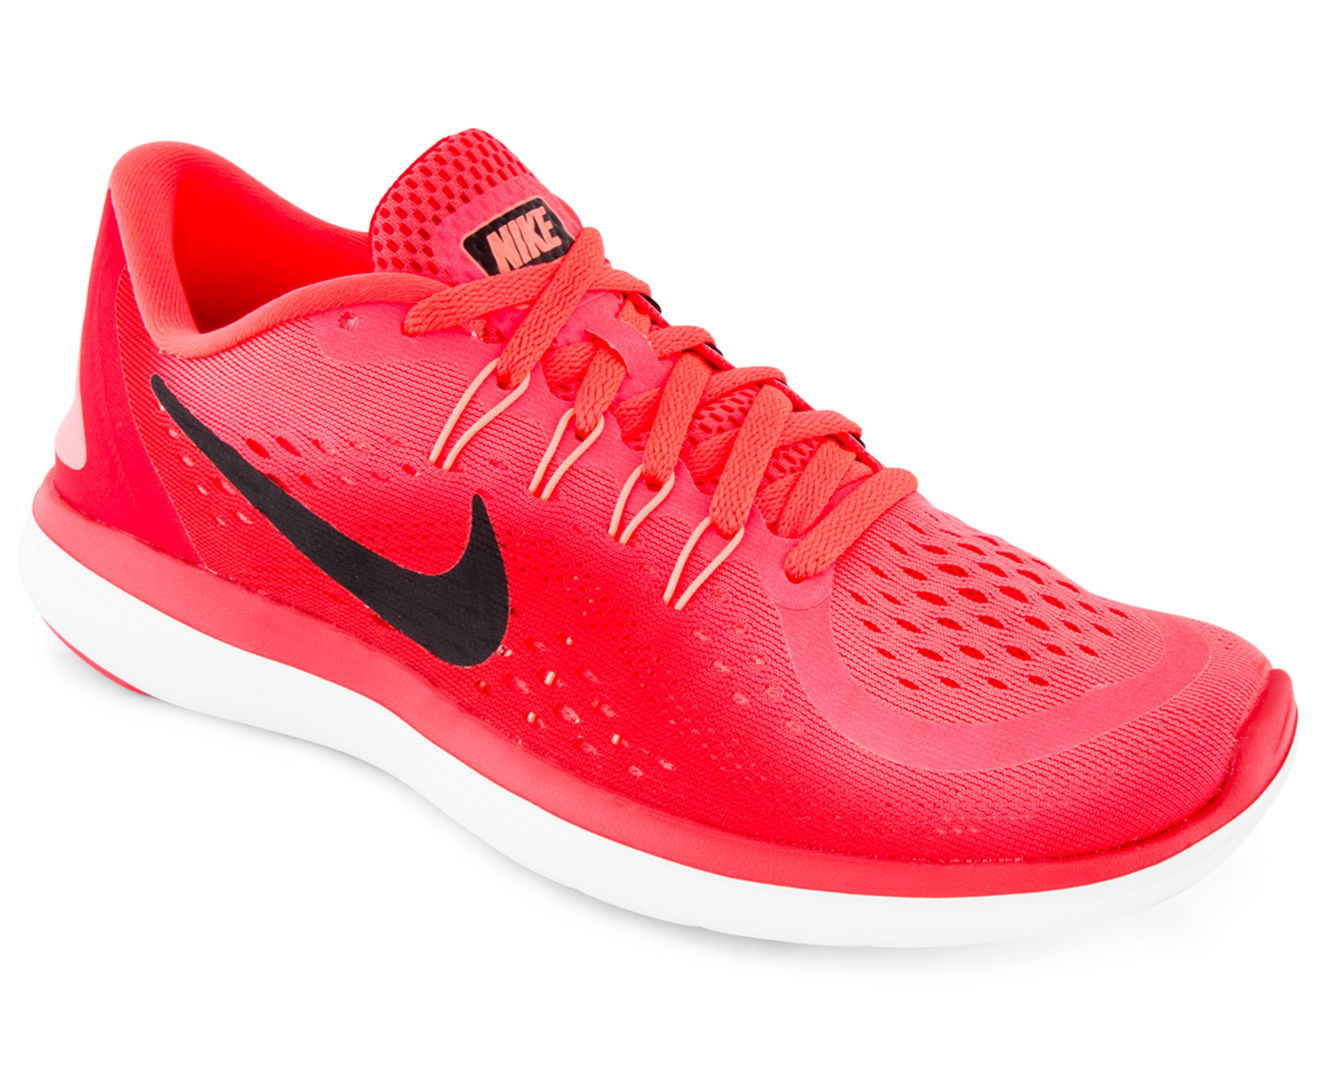 Nike Women's Flex 2017 RN Shoe - Pink/Black/White | GroceryRun.com.au